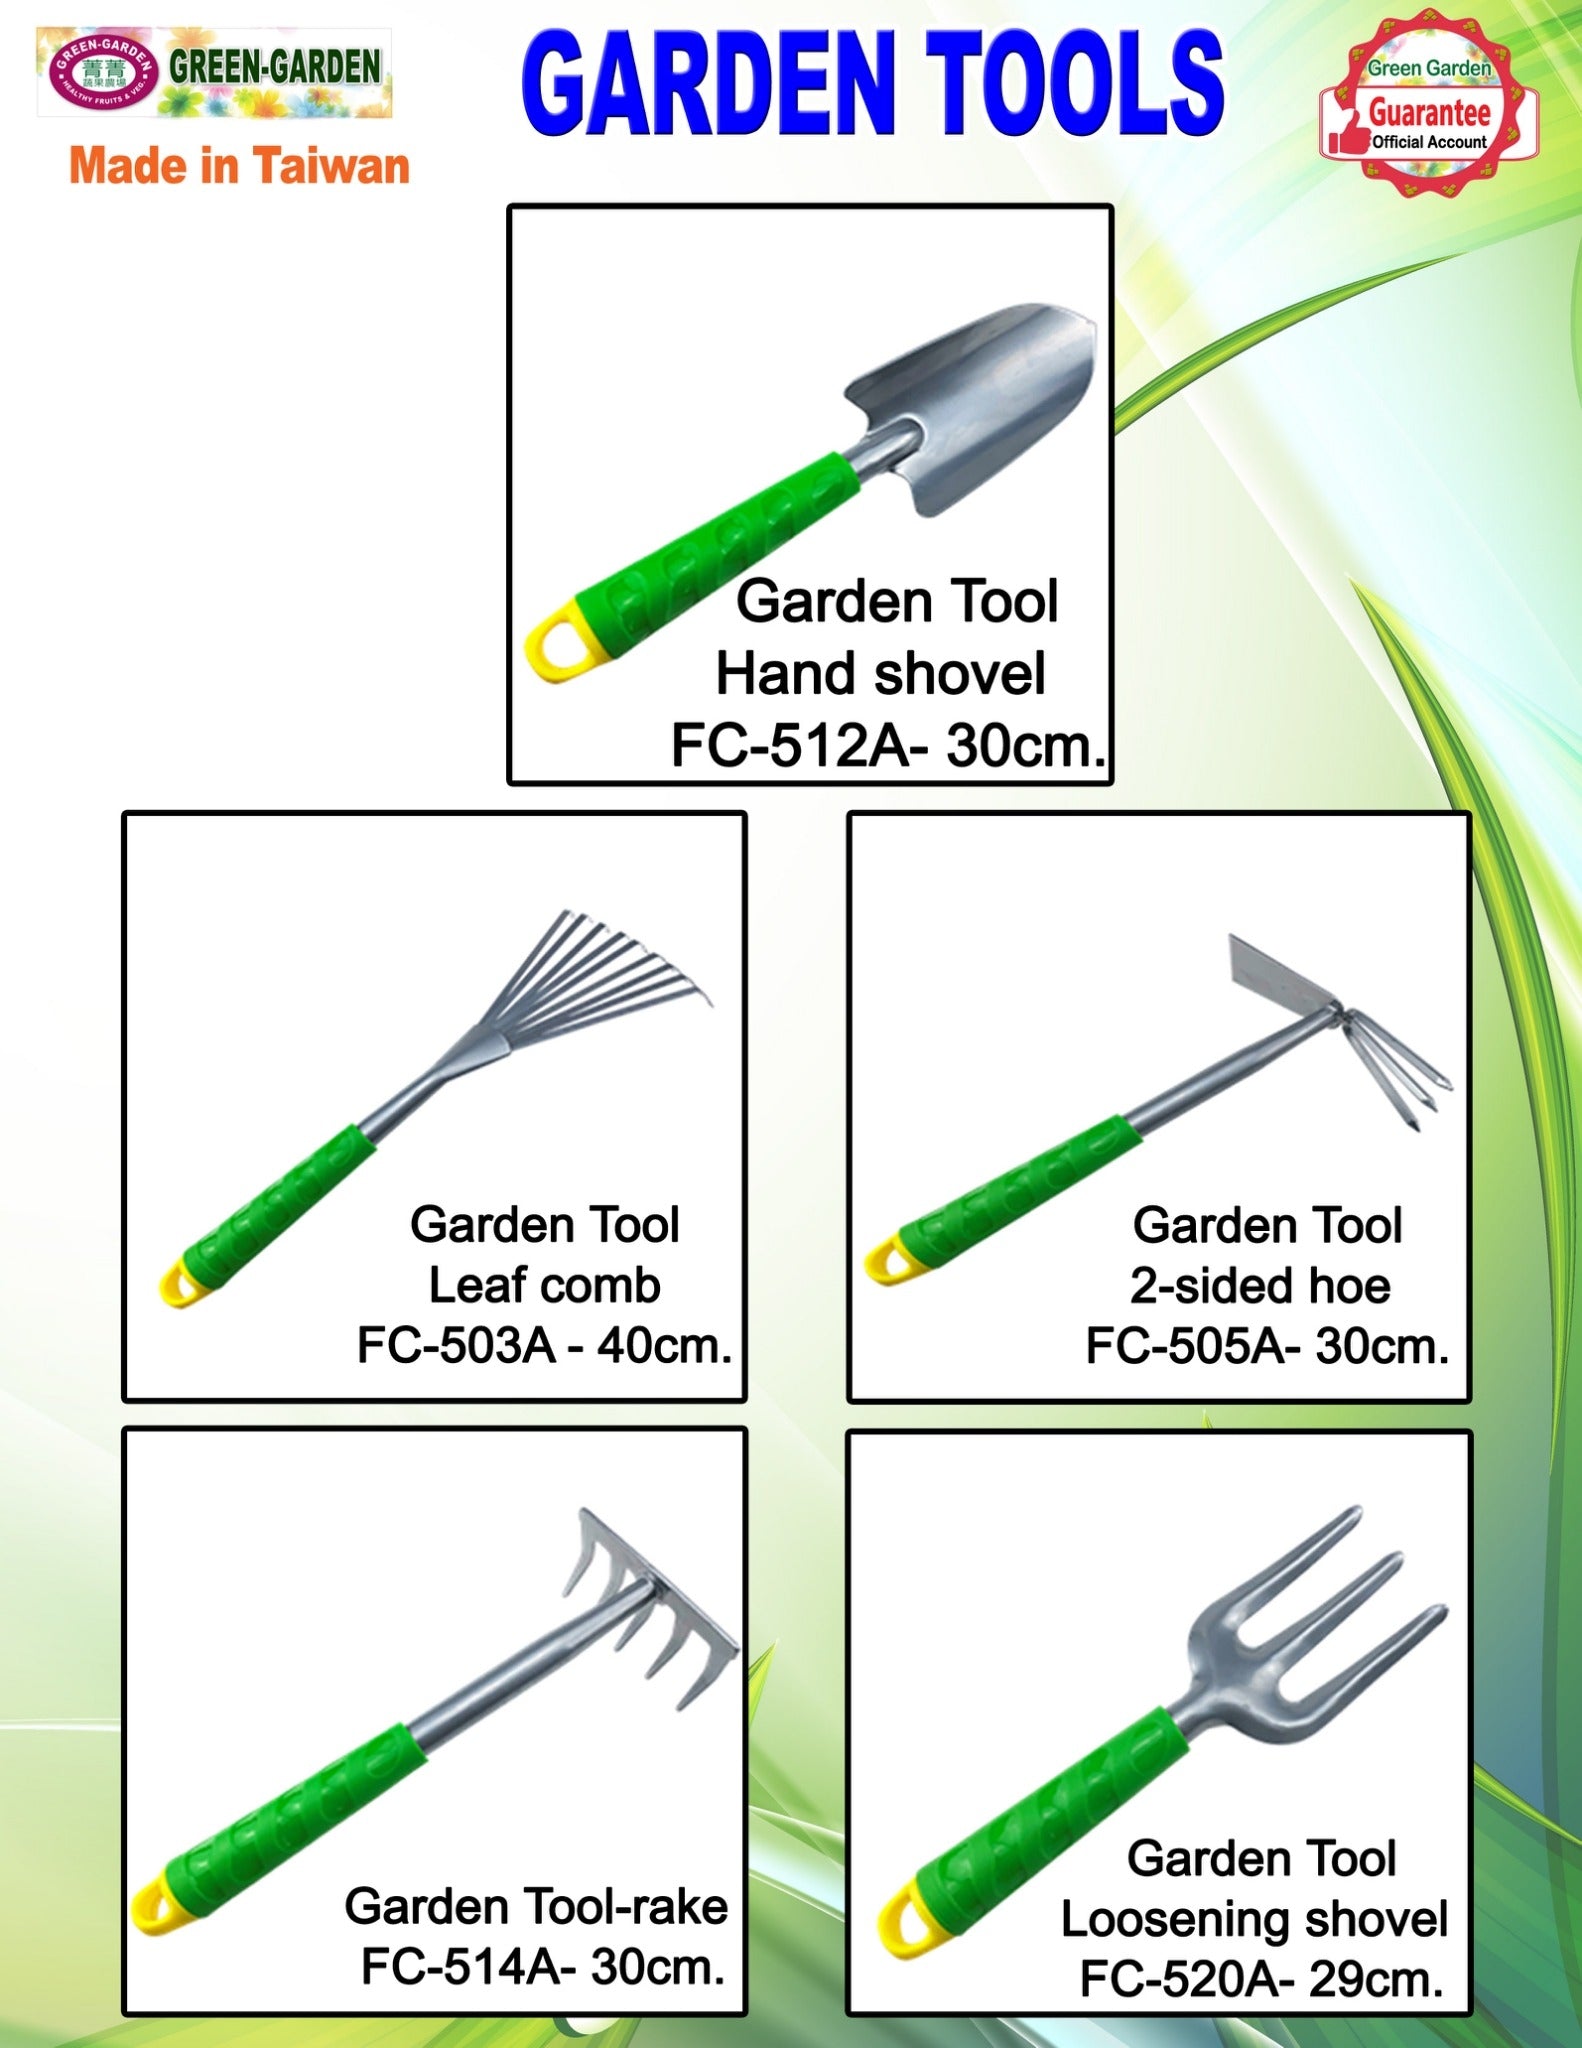 Garden Tool- Leaf comb 40cm